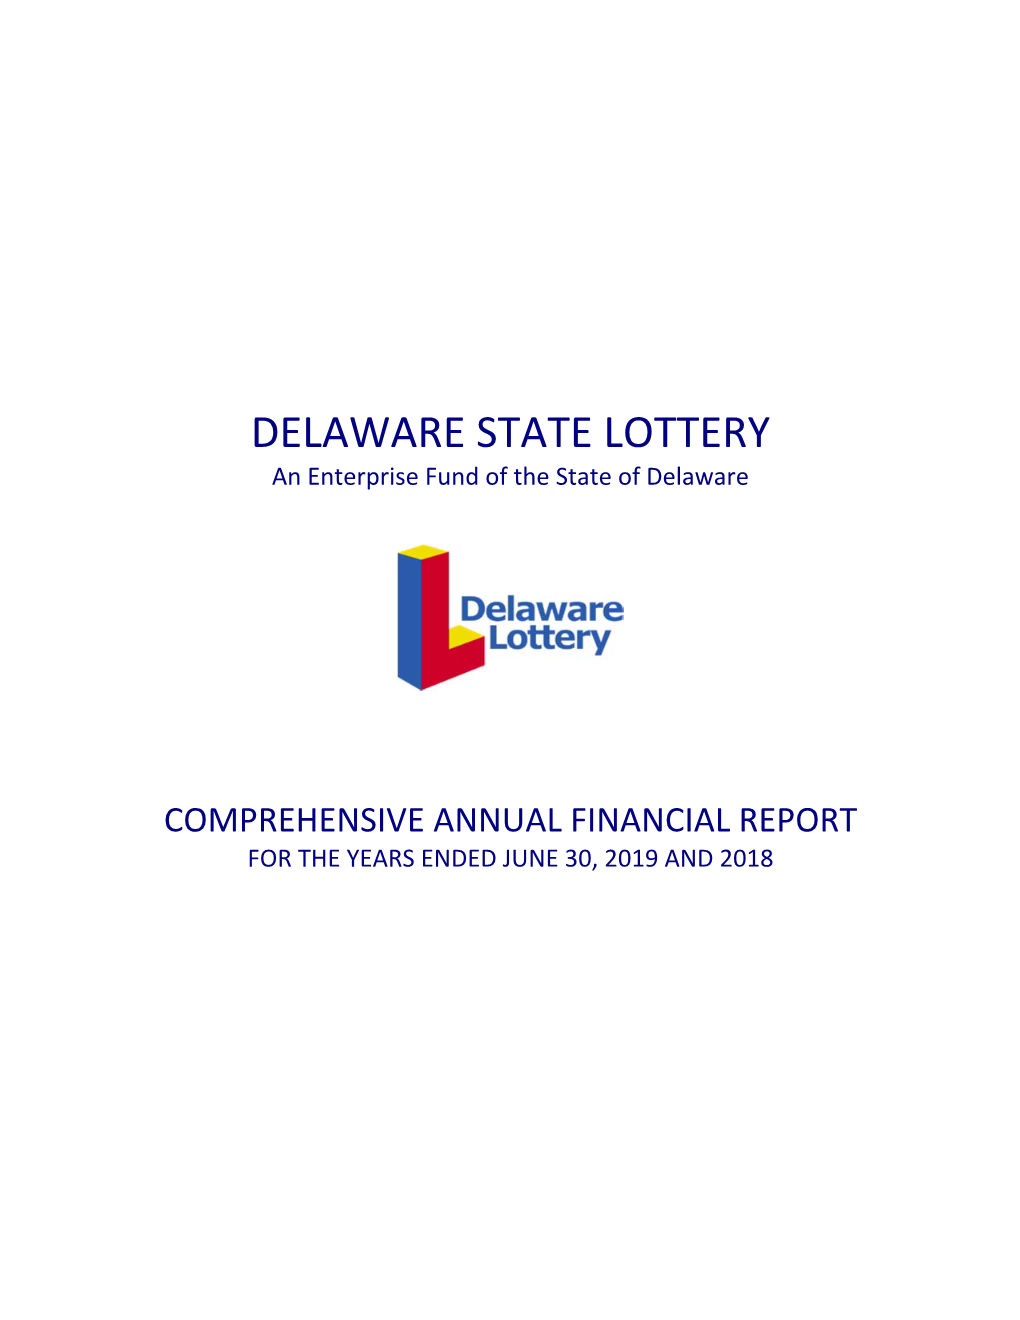 Delaware State Lottery Comprehensive Annual Report